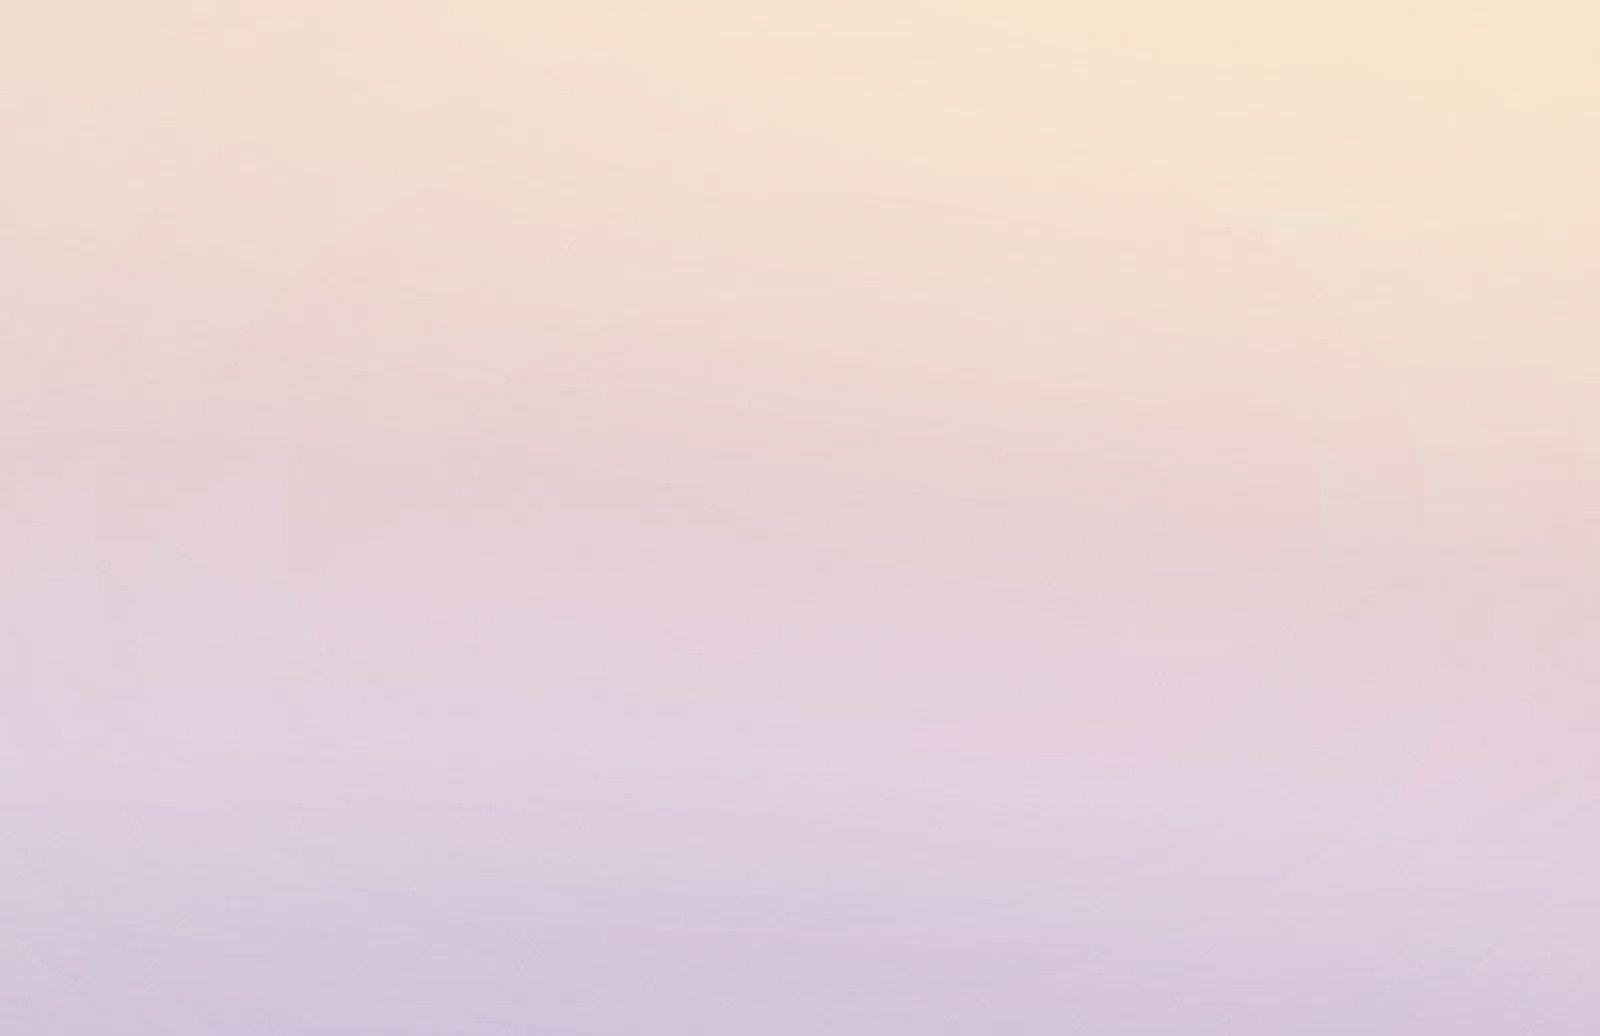 Light Pastel Blurred Background